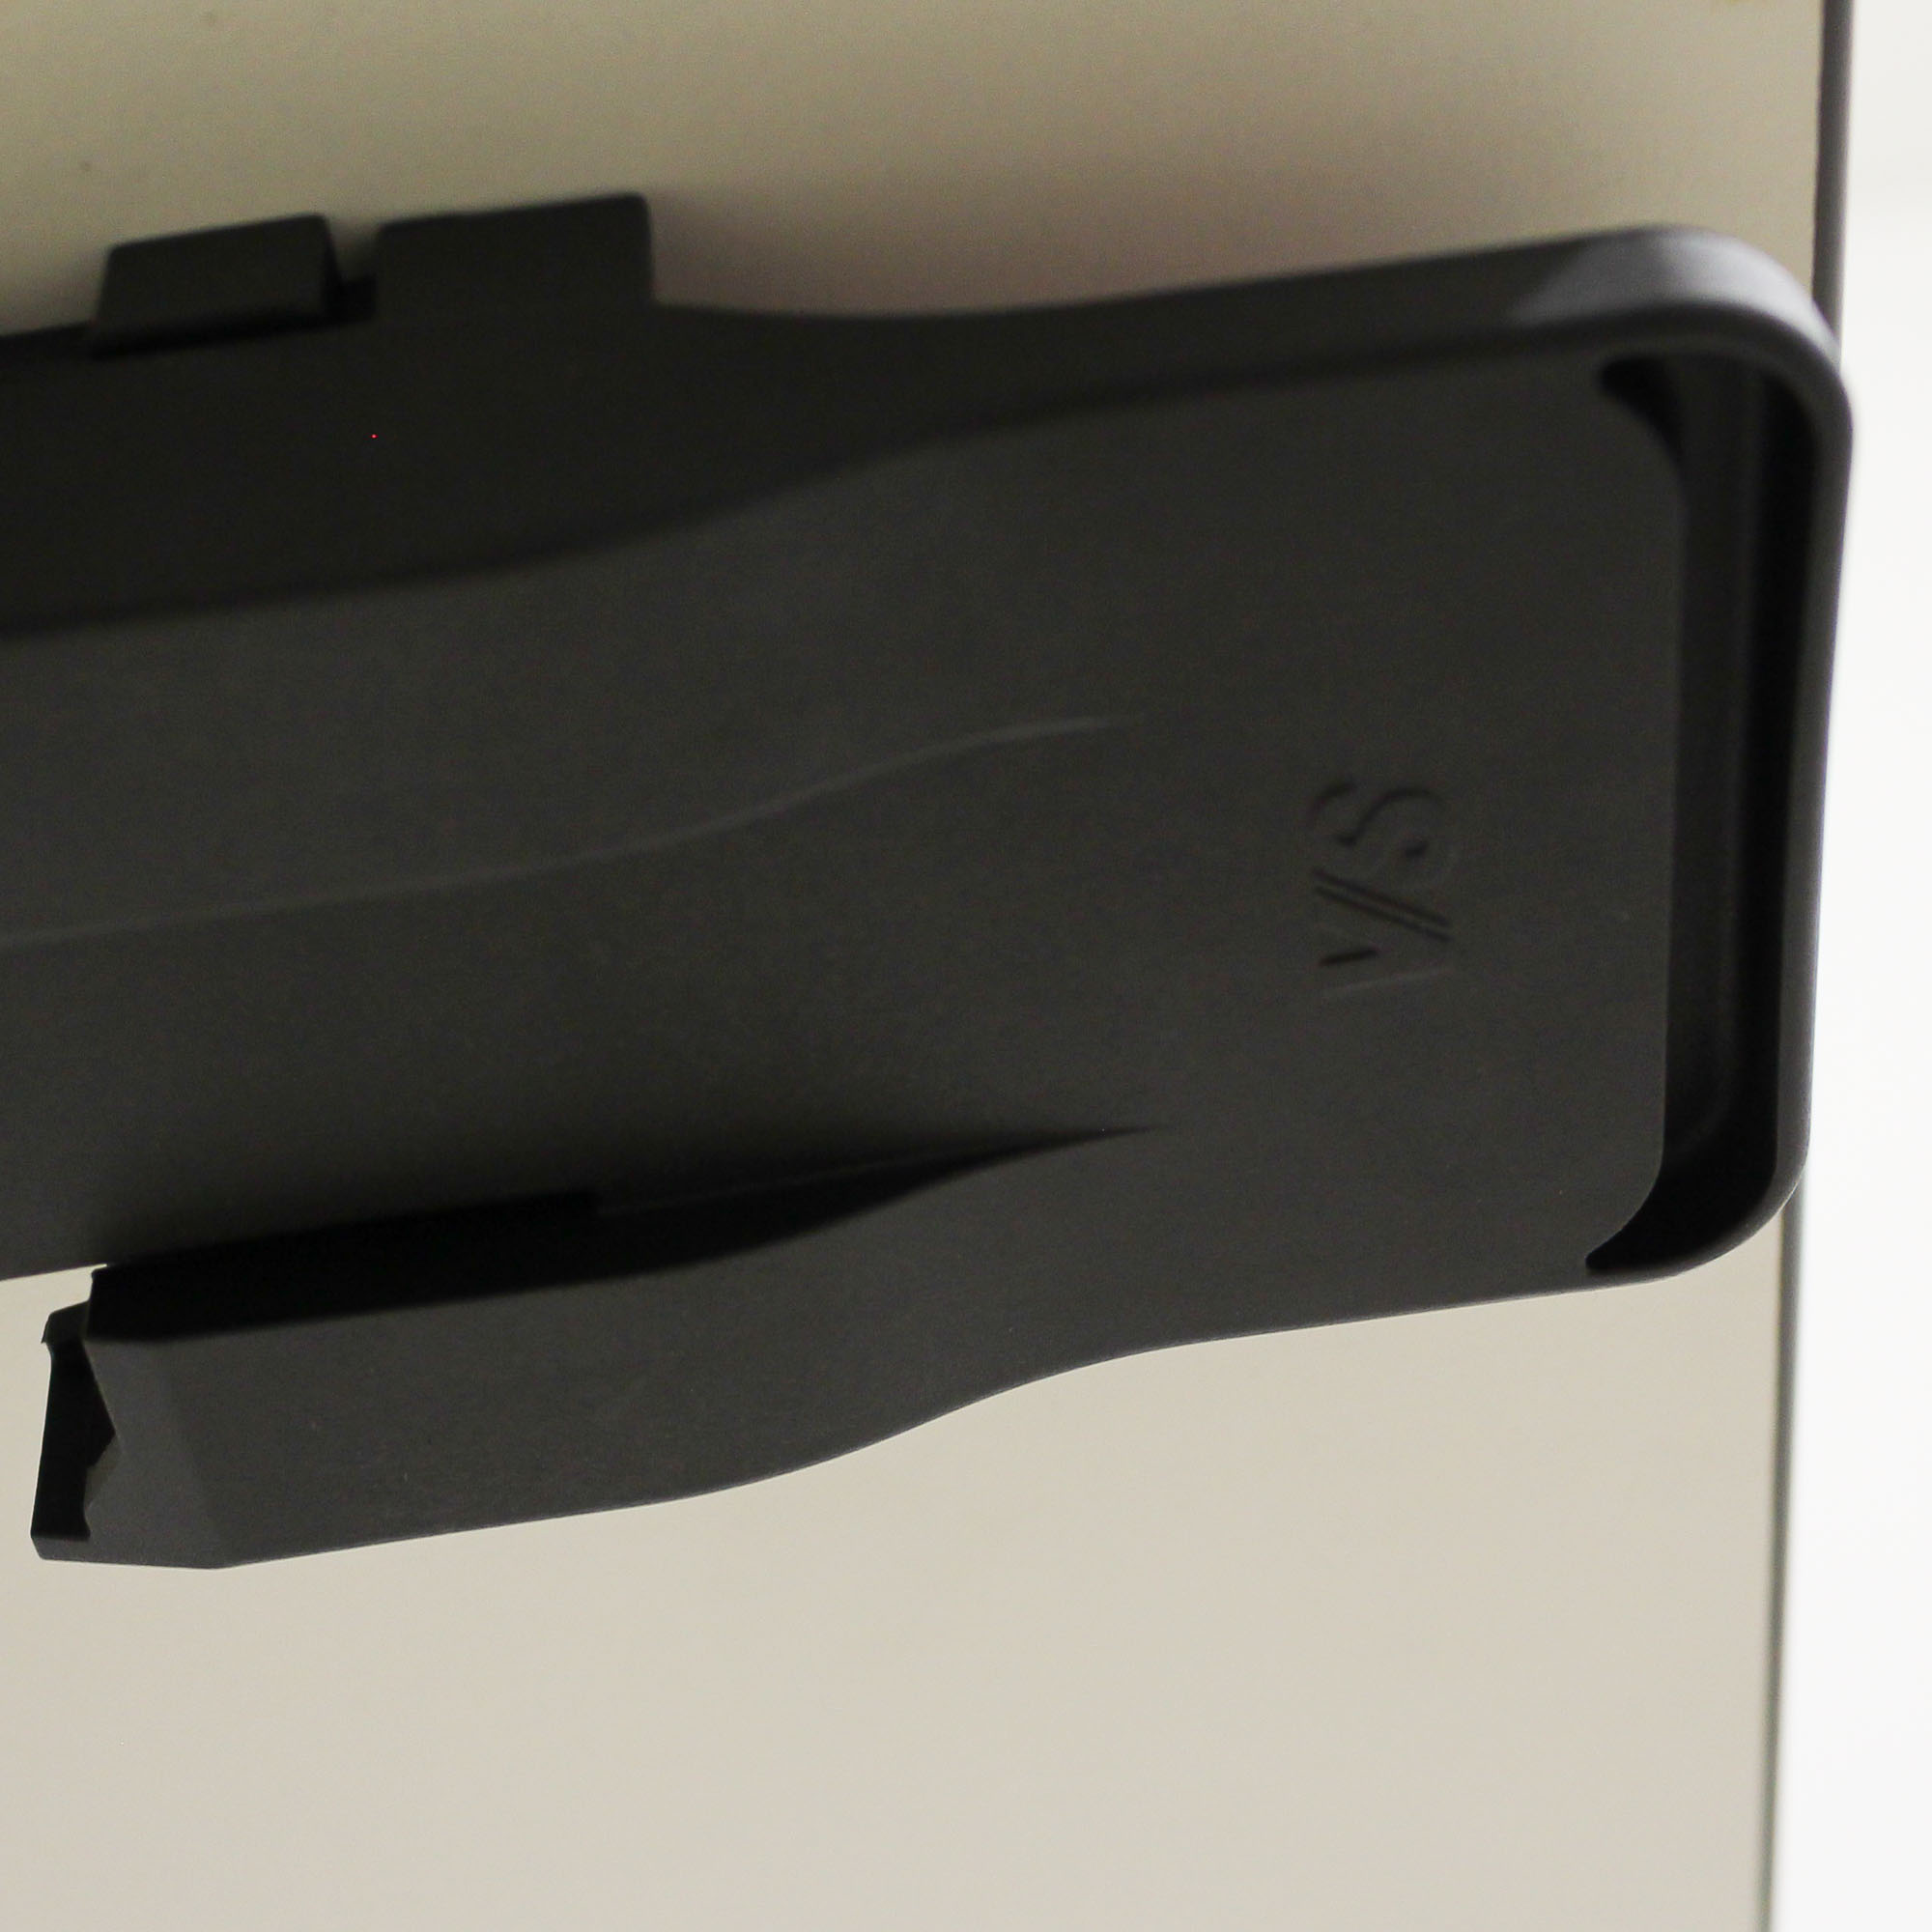 VS Lift Up Hubtisch - Platte weiß - 80x80 cm - Gestell silber - rollbar